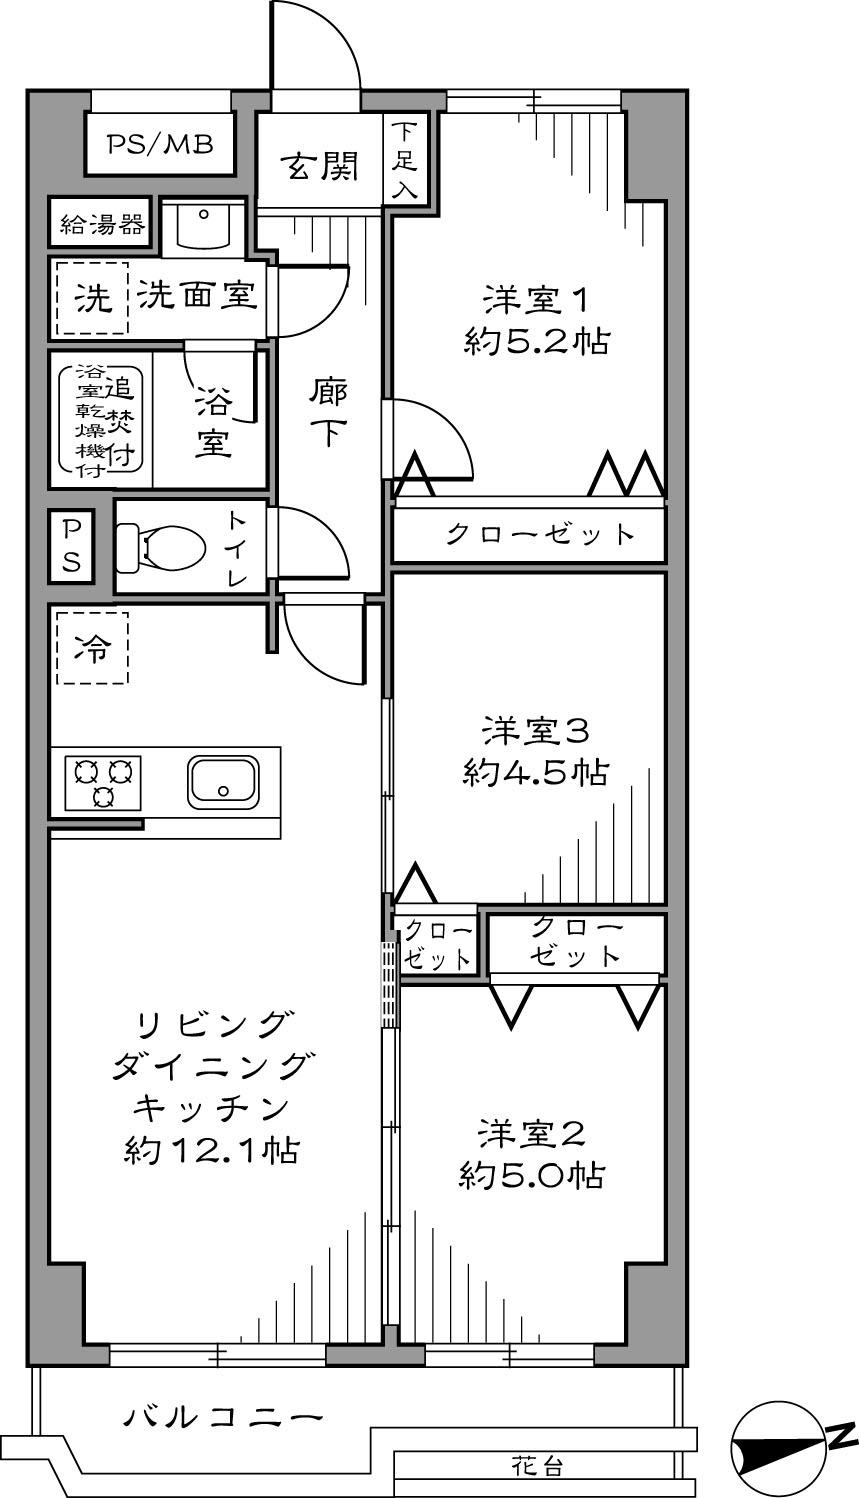 Floor plan. 3LDK, Price 25,800,000 yen, Footprint 59.4 sq m , Balcony area 5.3 sq m